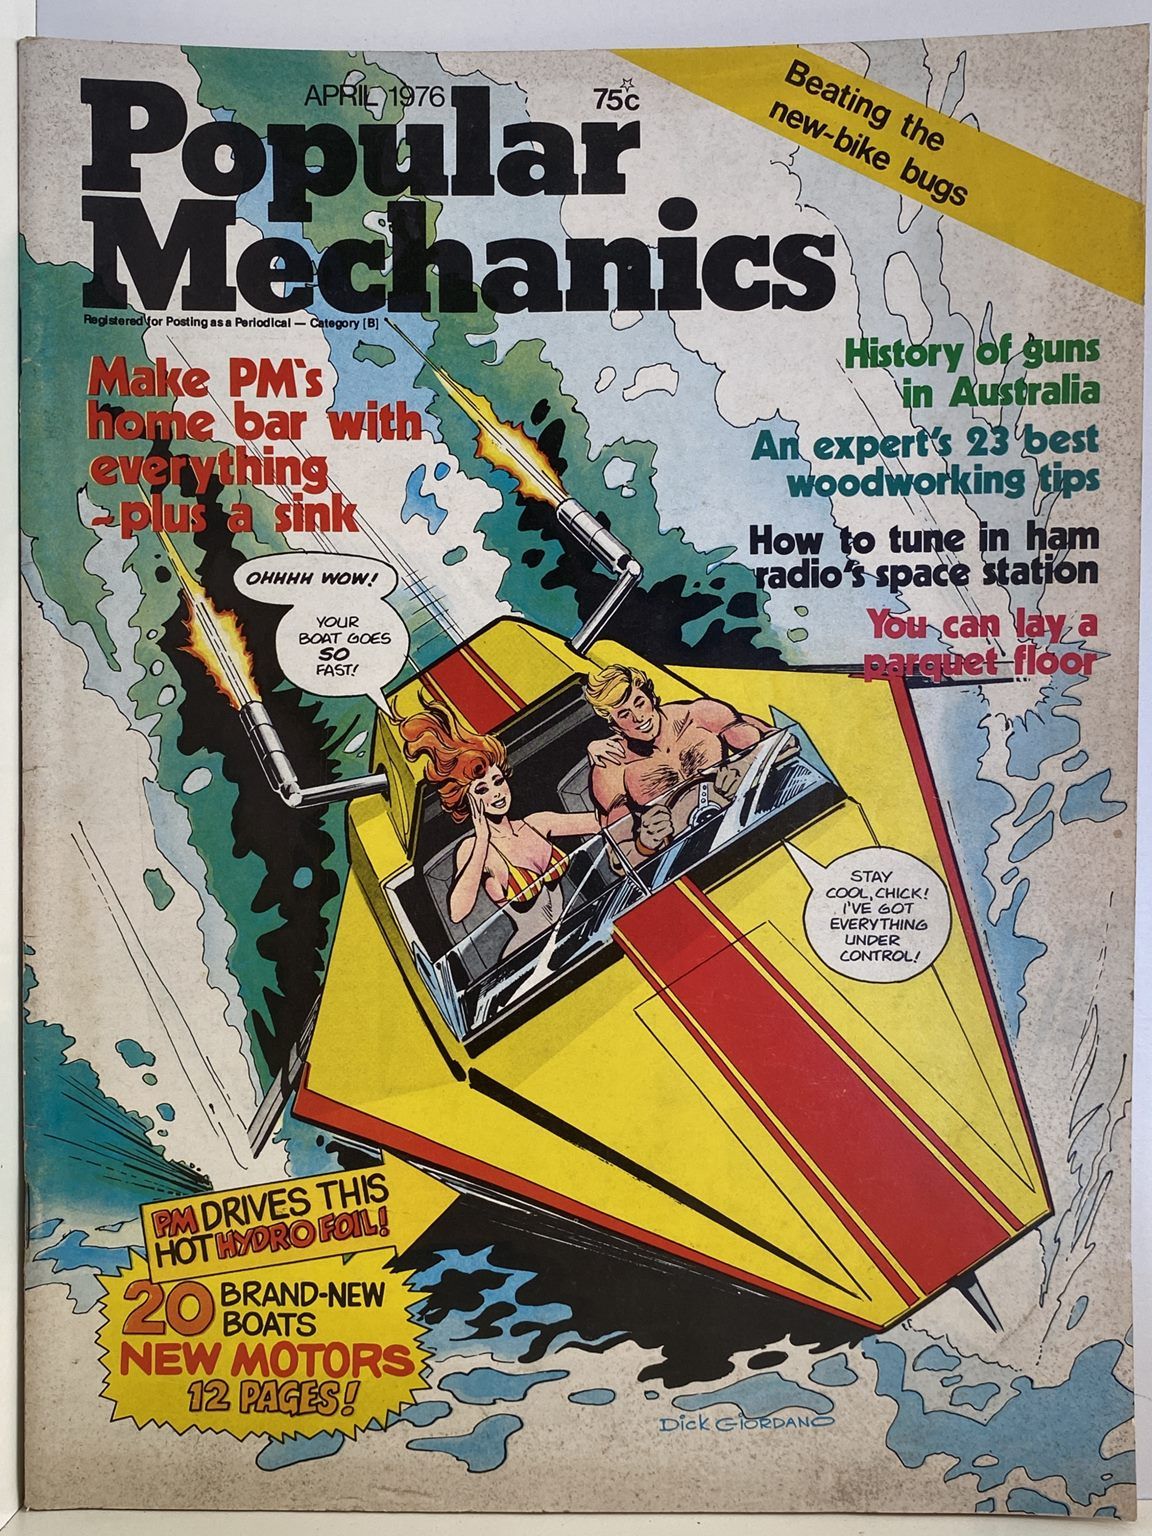 VINTAGE MAGAZINE: Popular Mechanics - Vol. 145, No. 2 - April 1976